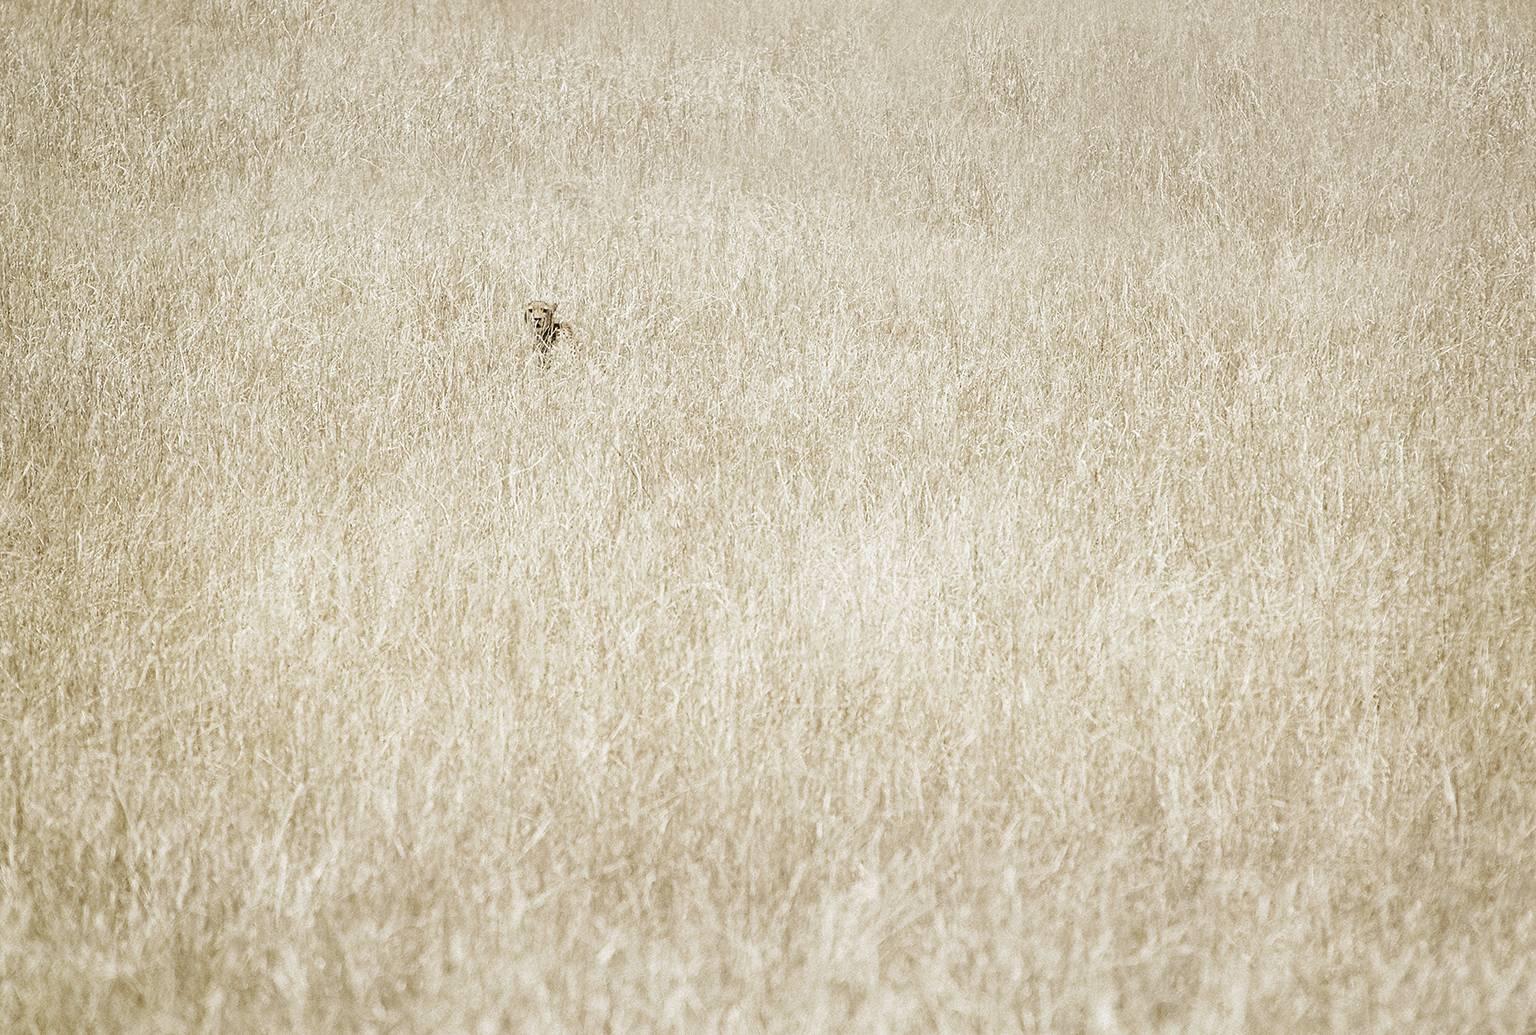 Chris Gordaneer Landscape Photograph - Cheetah No. 2